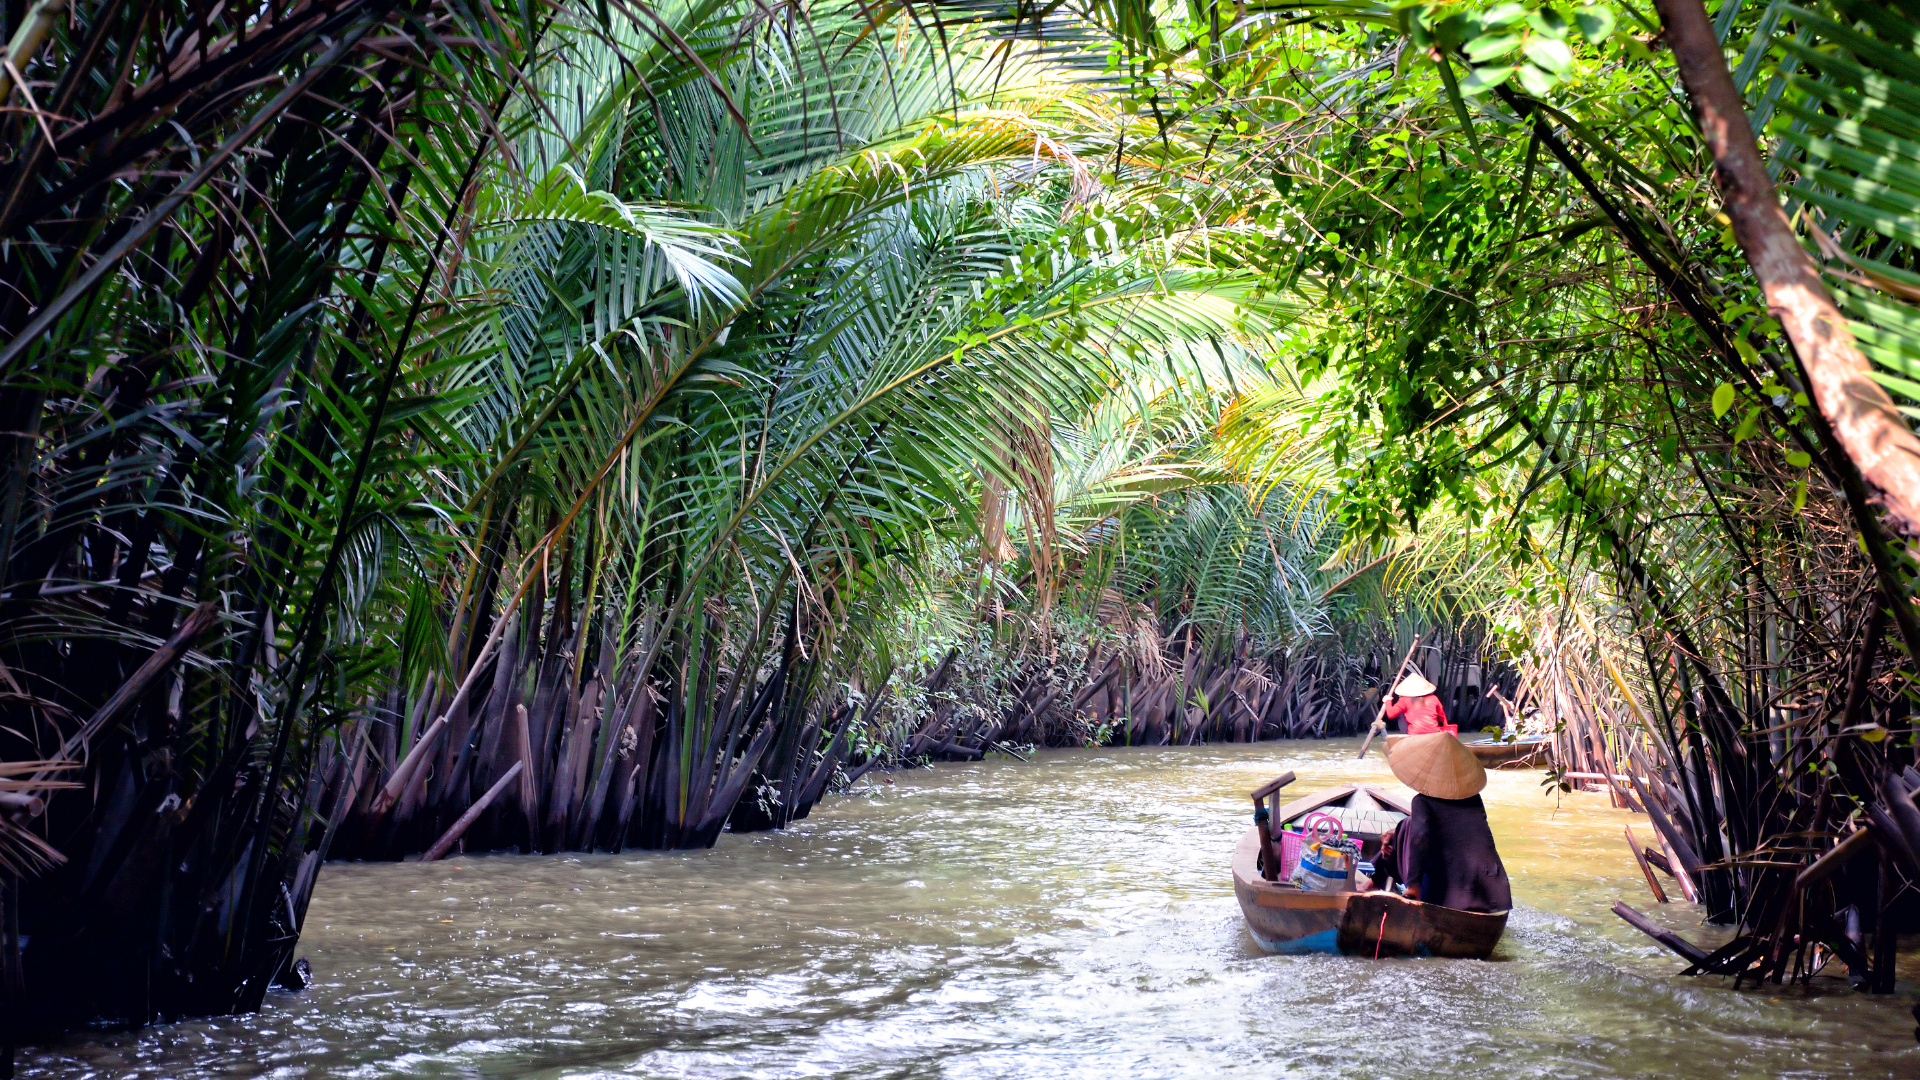 Mekong River, Vietnam's parallels, Authentic journey, Cultural immersion, 1920x1080 Full HD Desktop